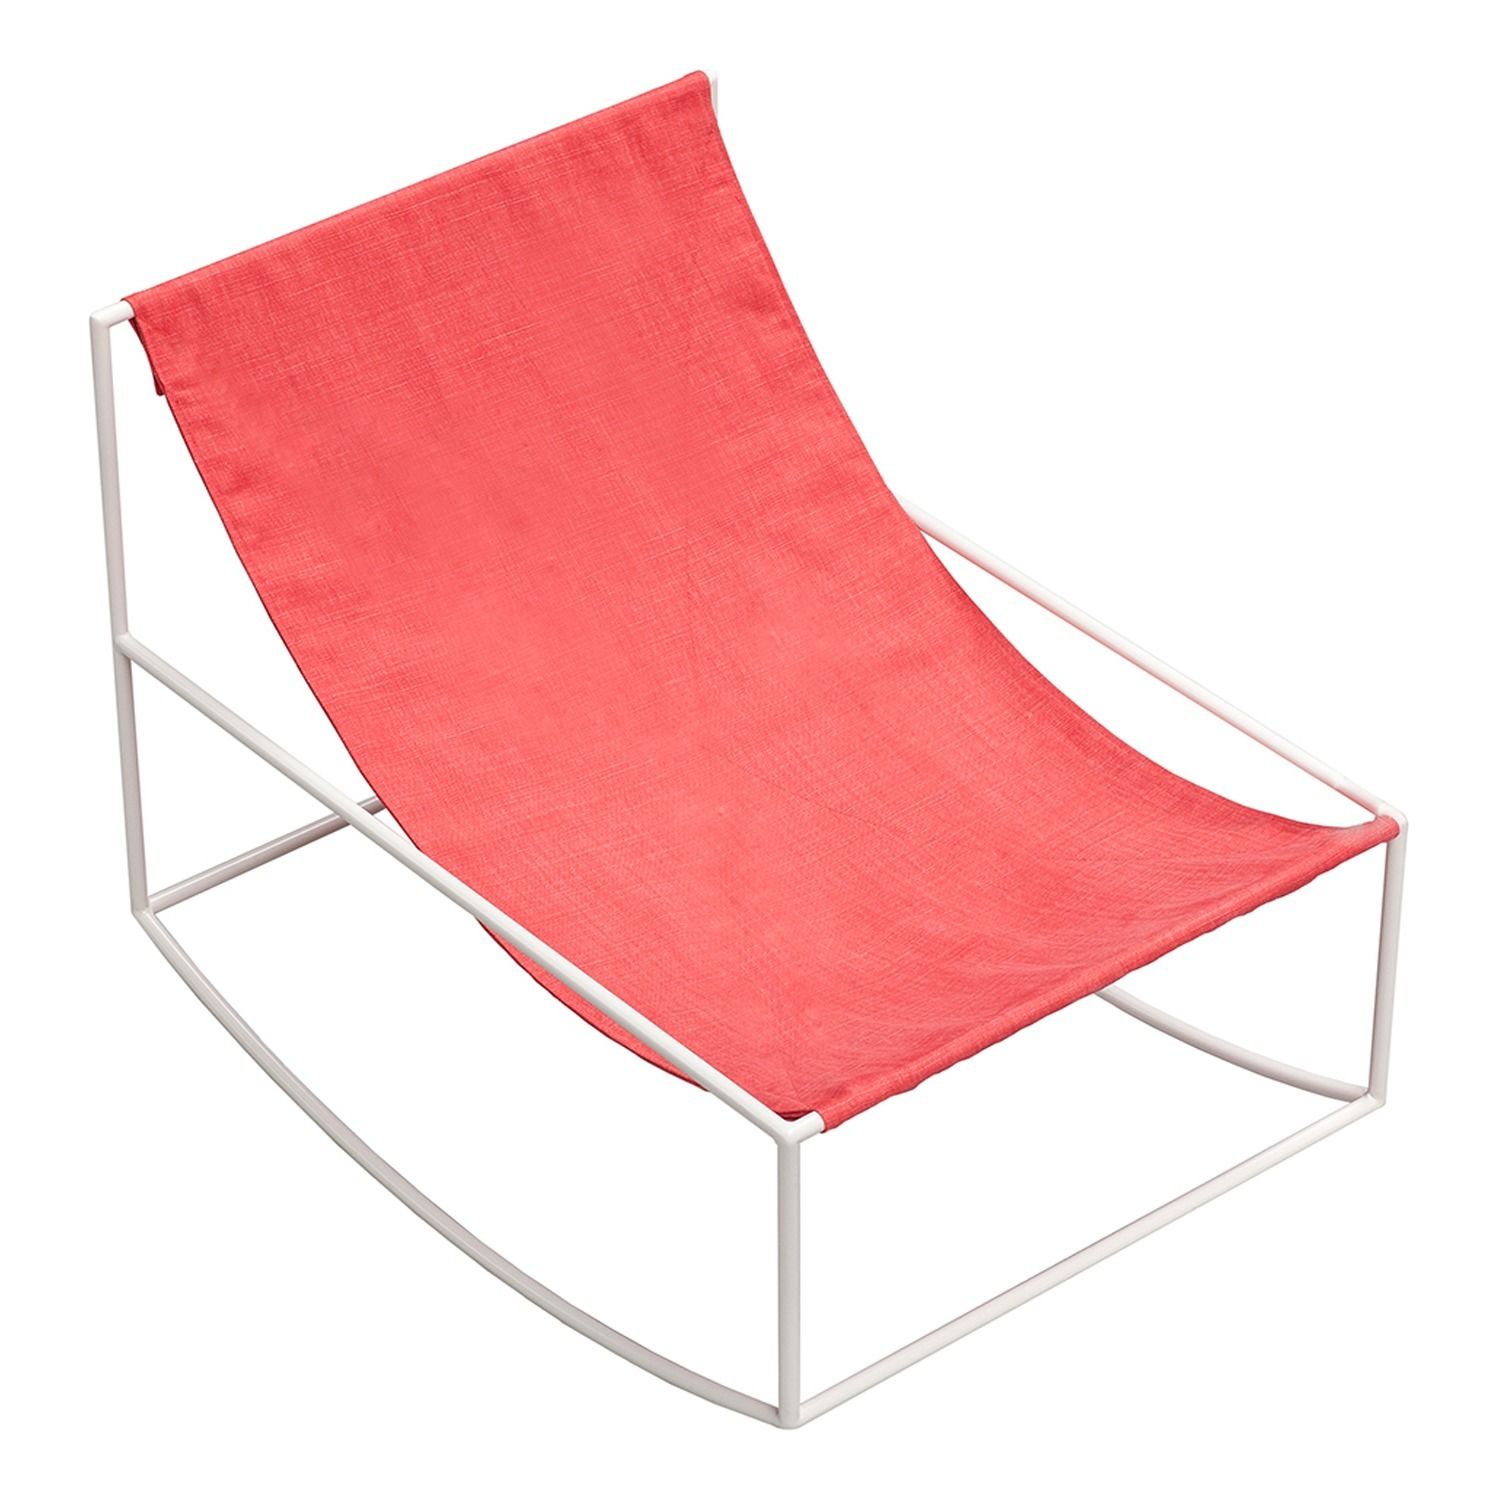 Valerie Objects - Fauteuil en lin Rocking Chair - Rouge